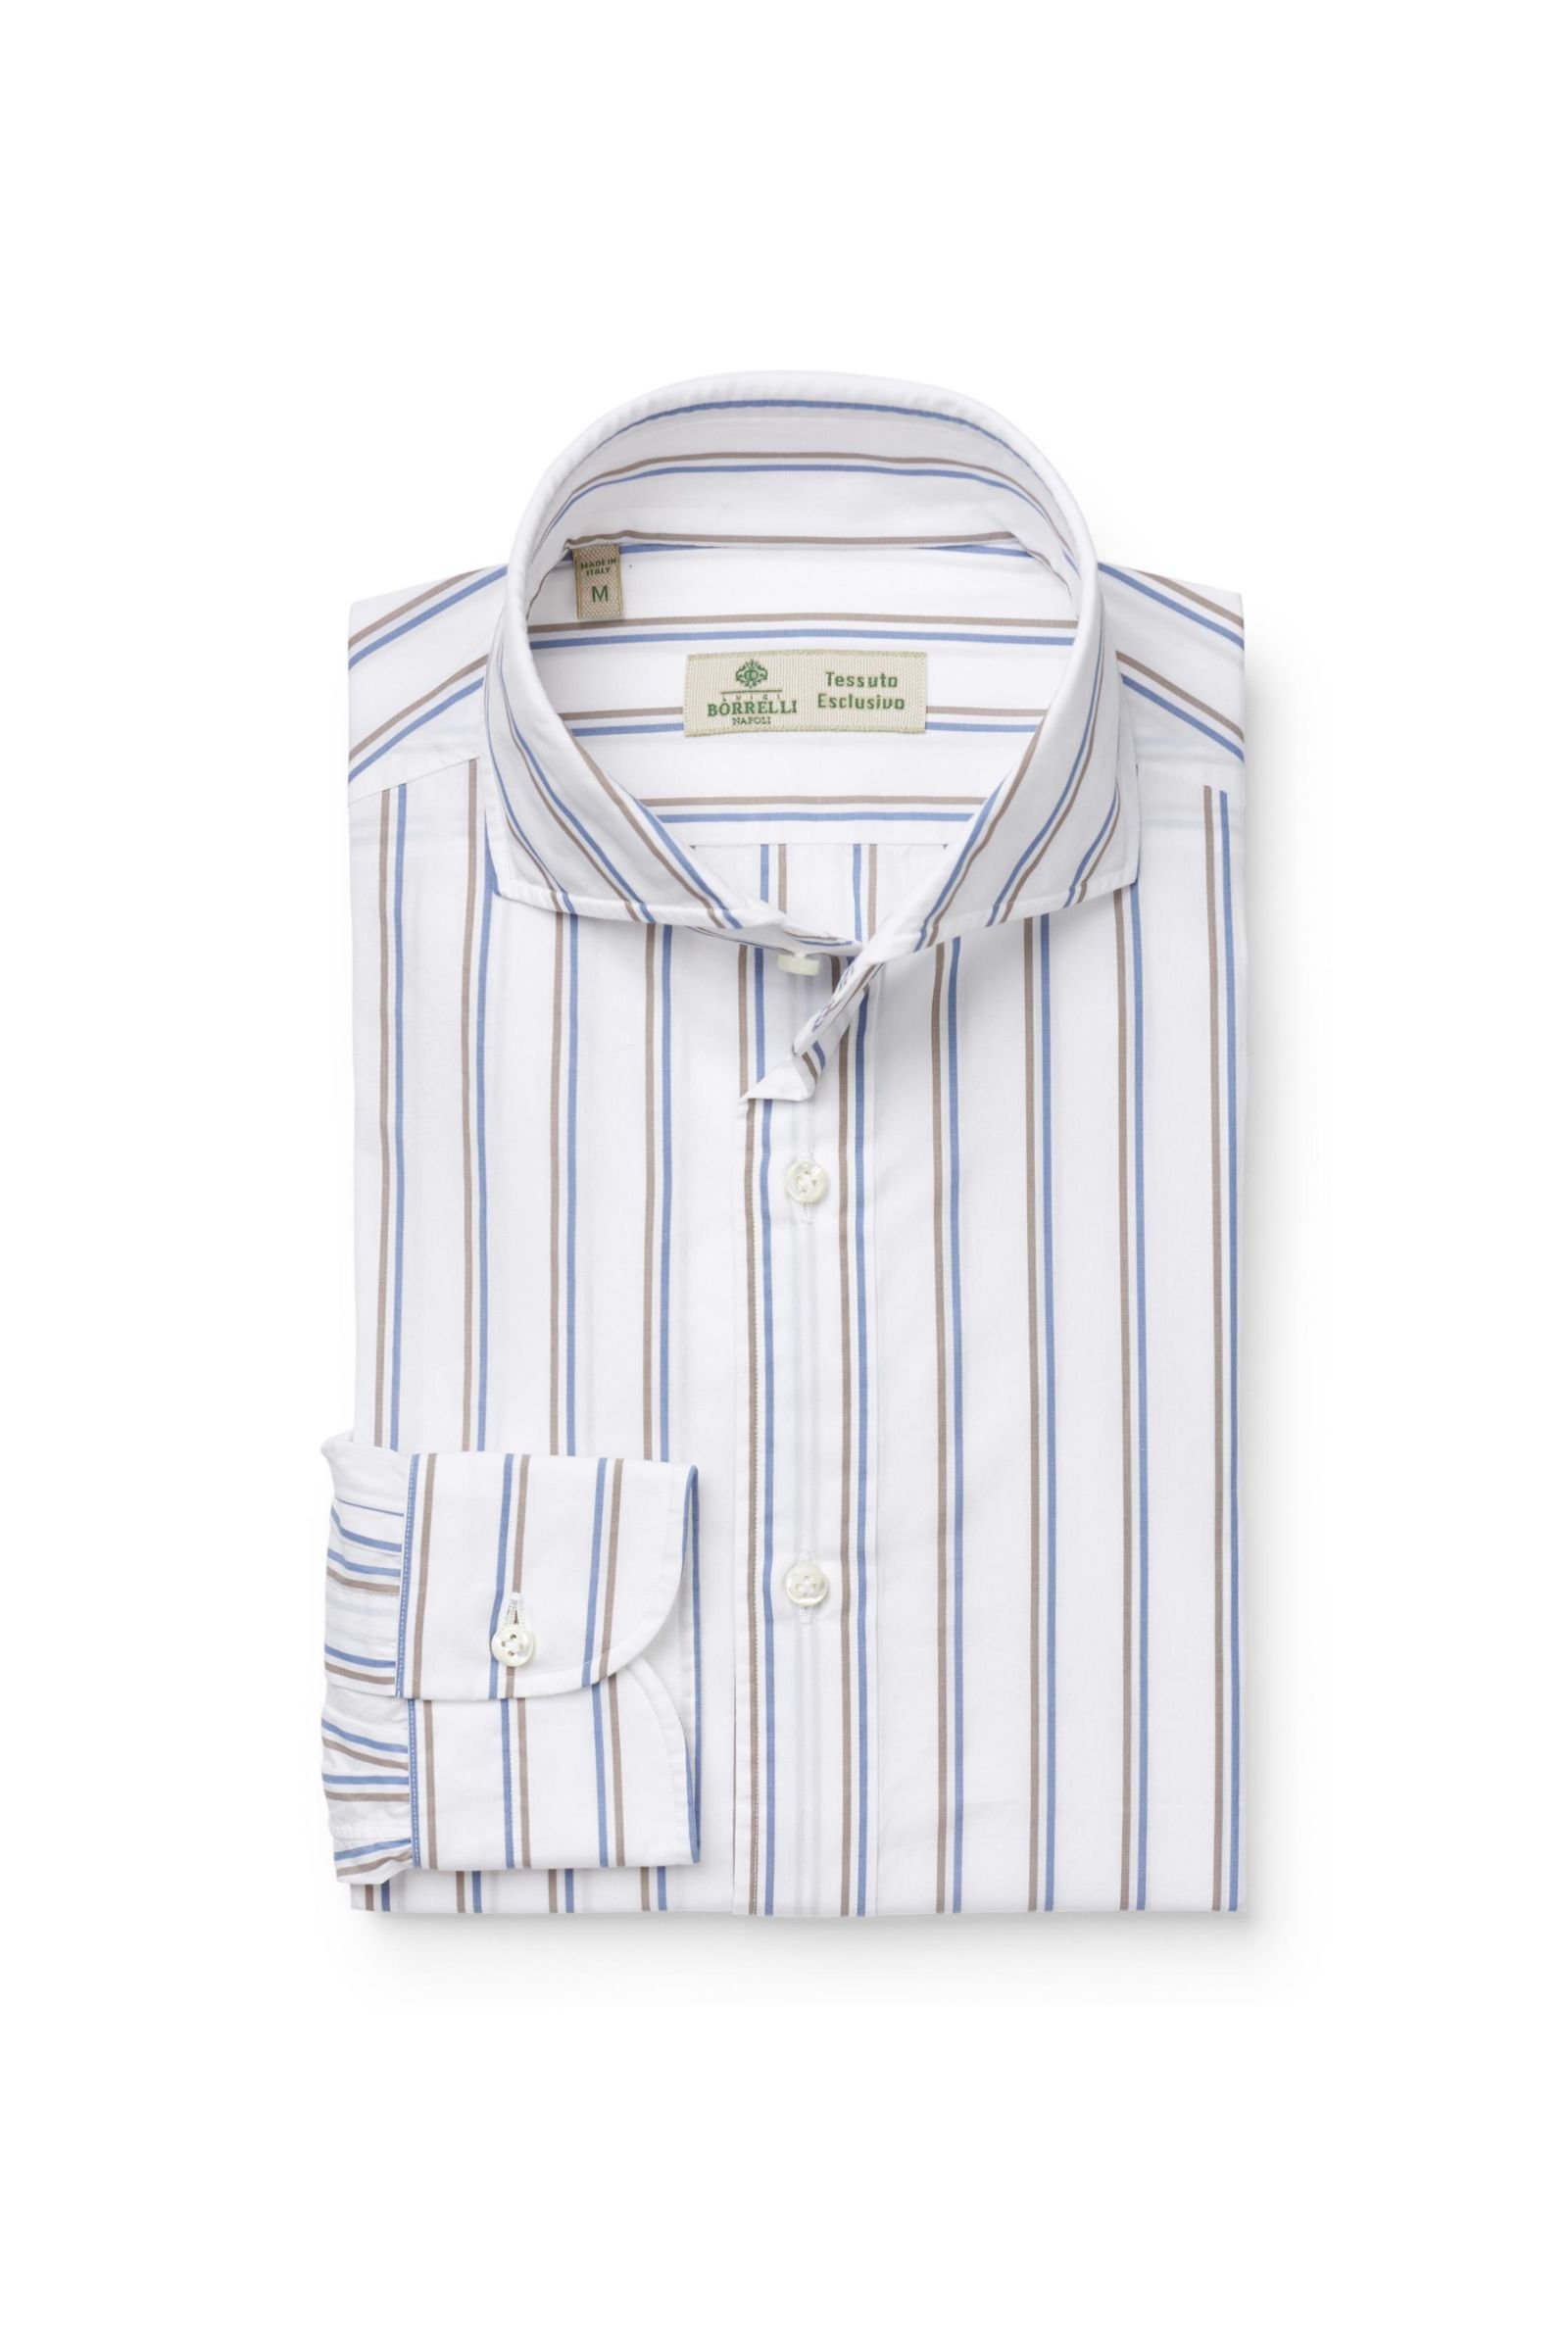 Business shirt 'Felice' shark collar white/smoky blue striped